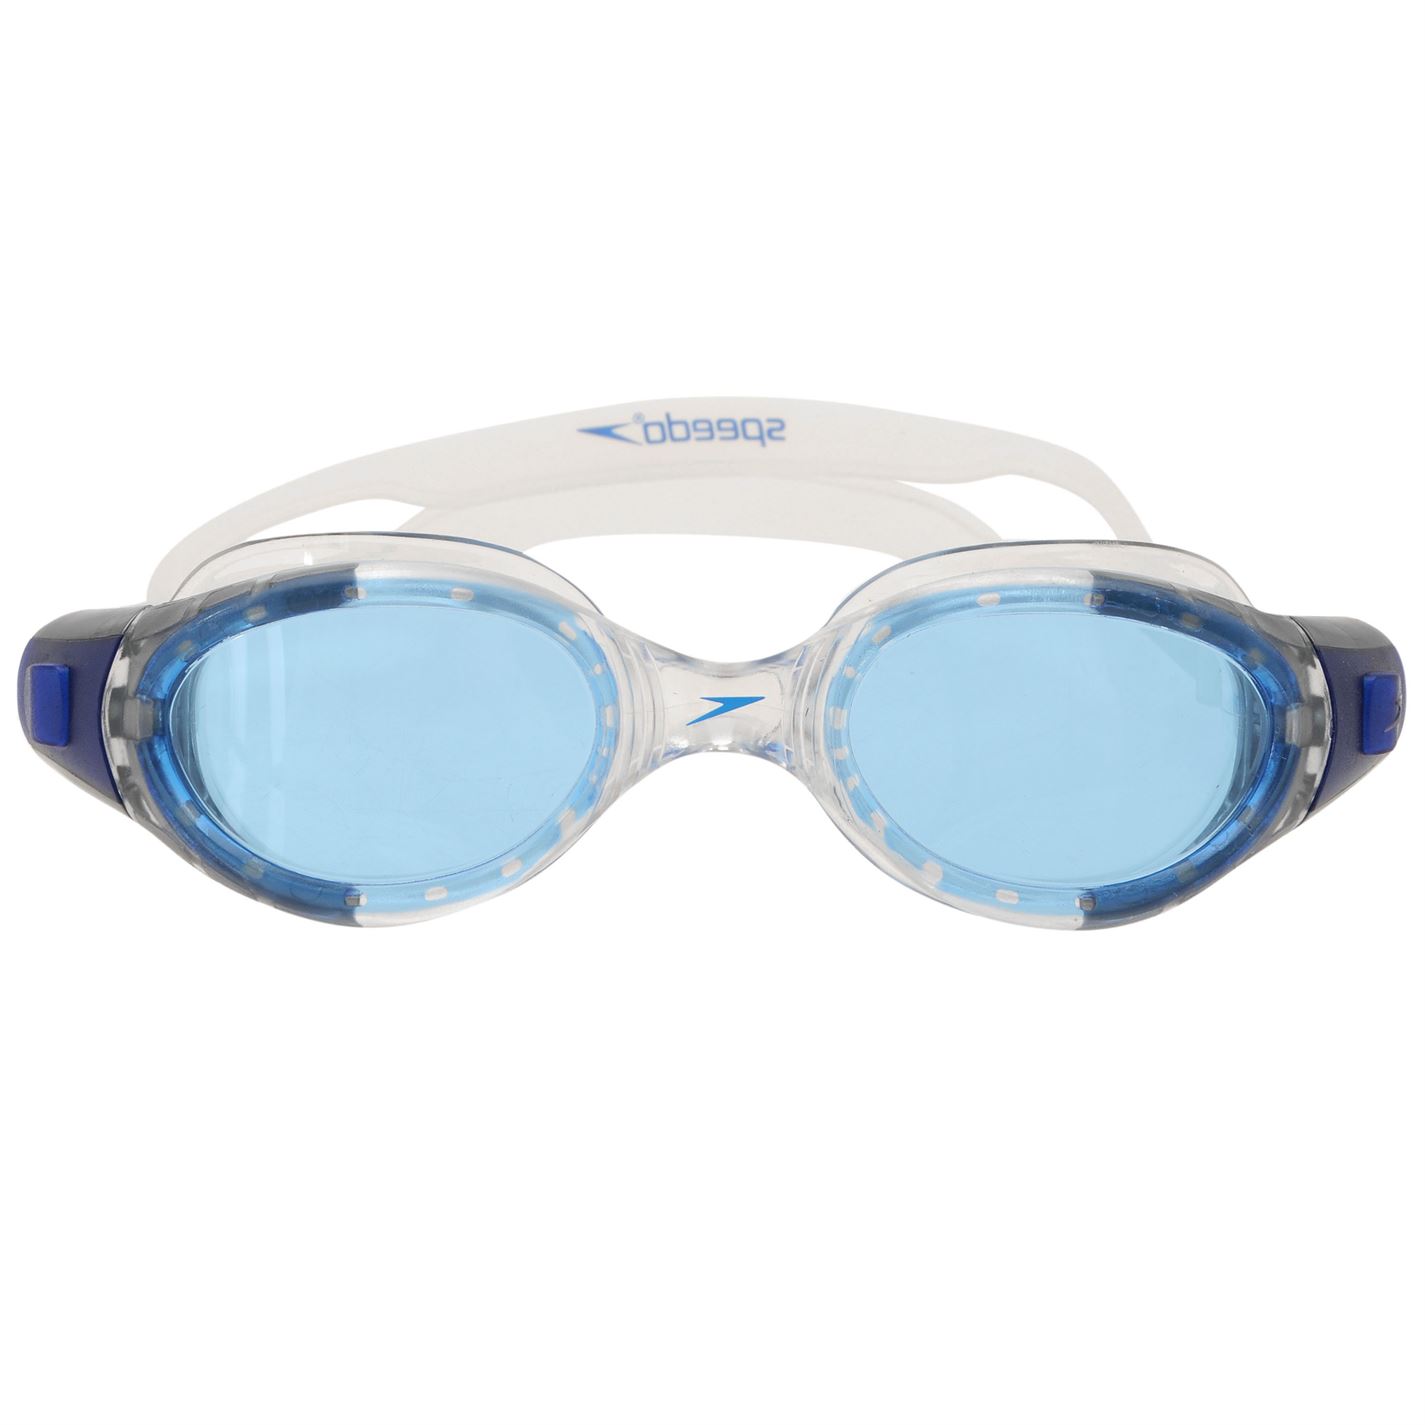 Speedo Futura Biofuse Flexiseal Goggles